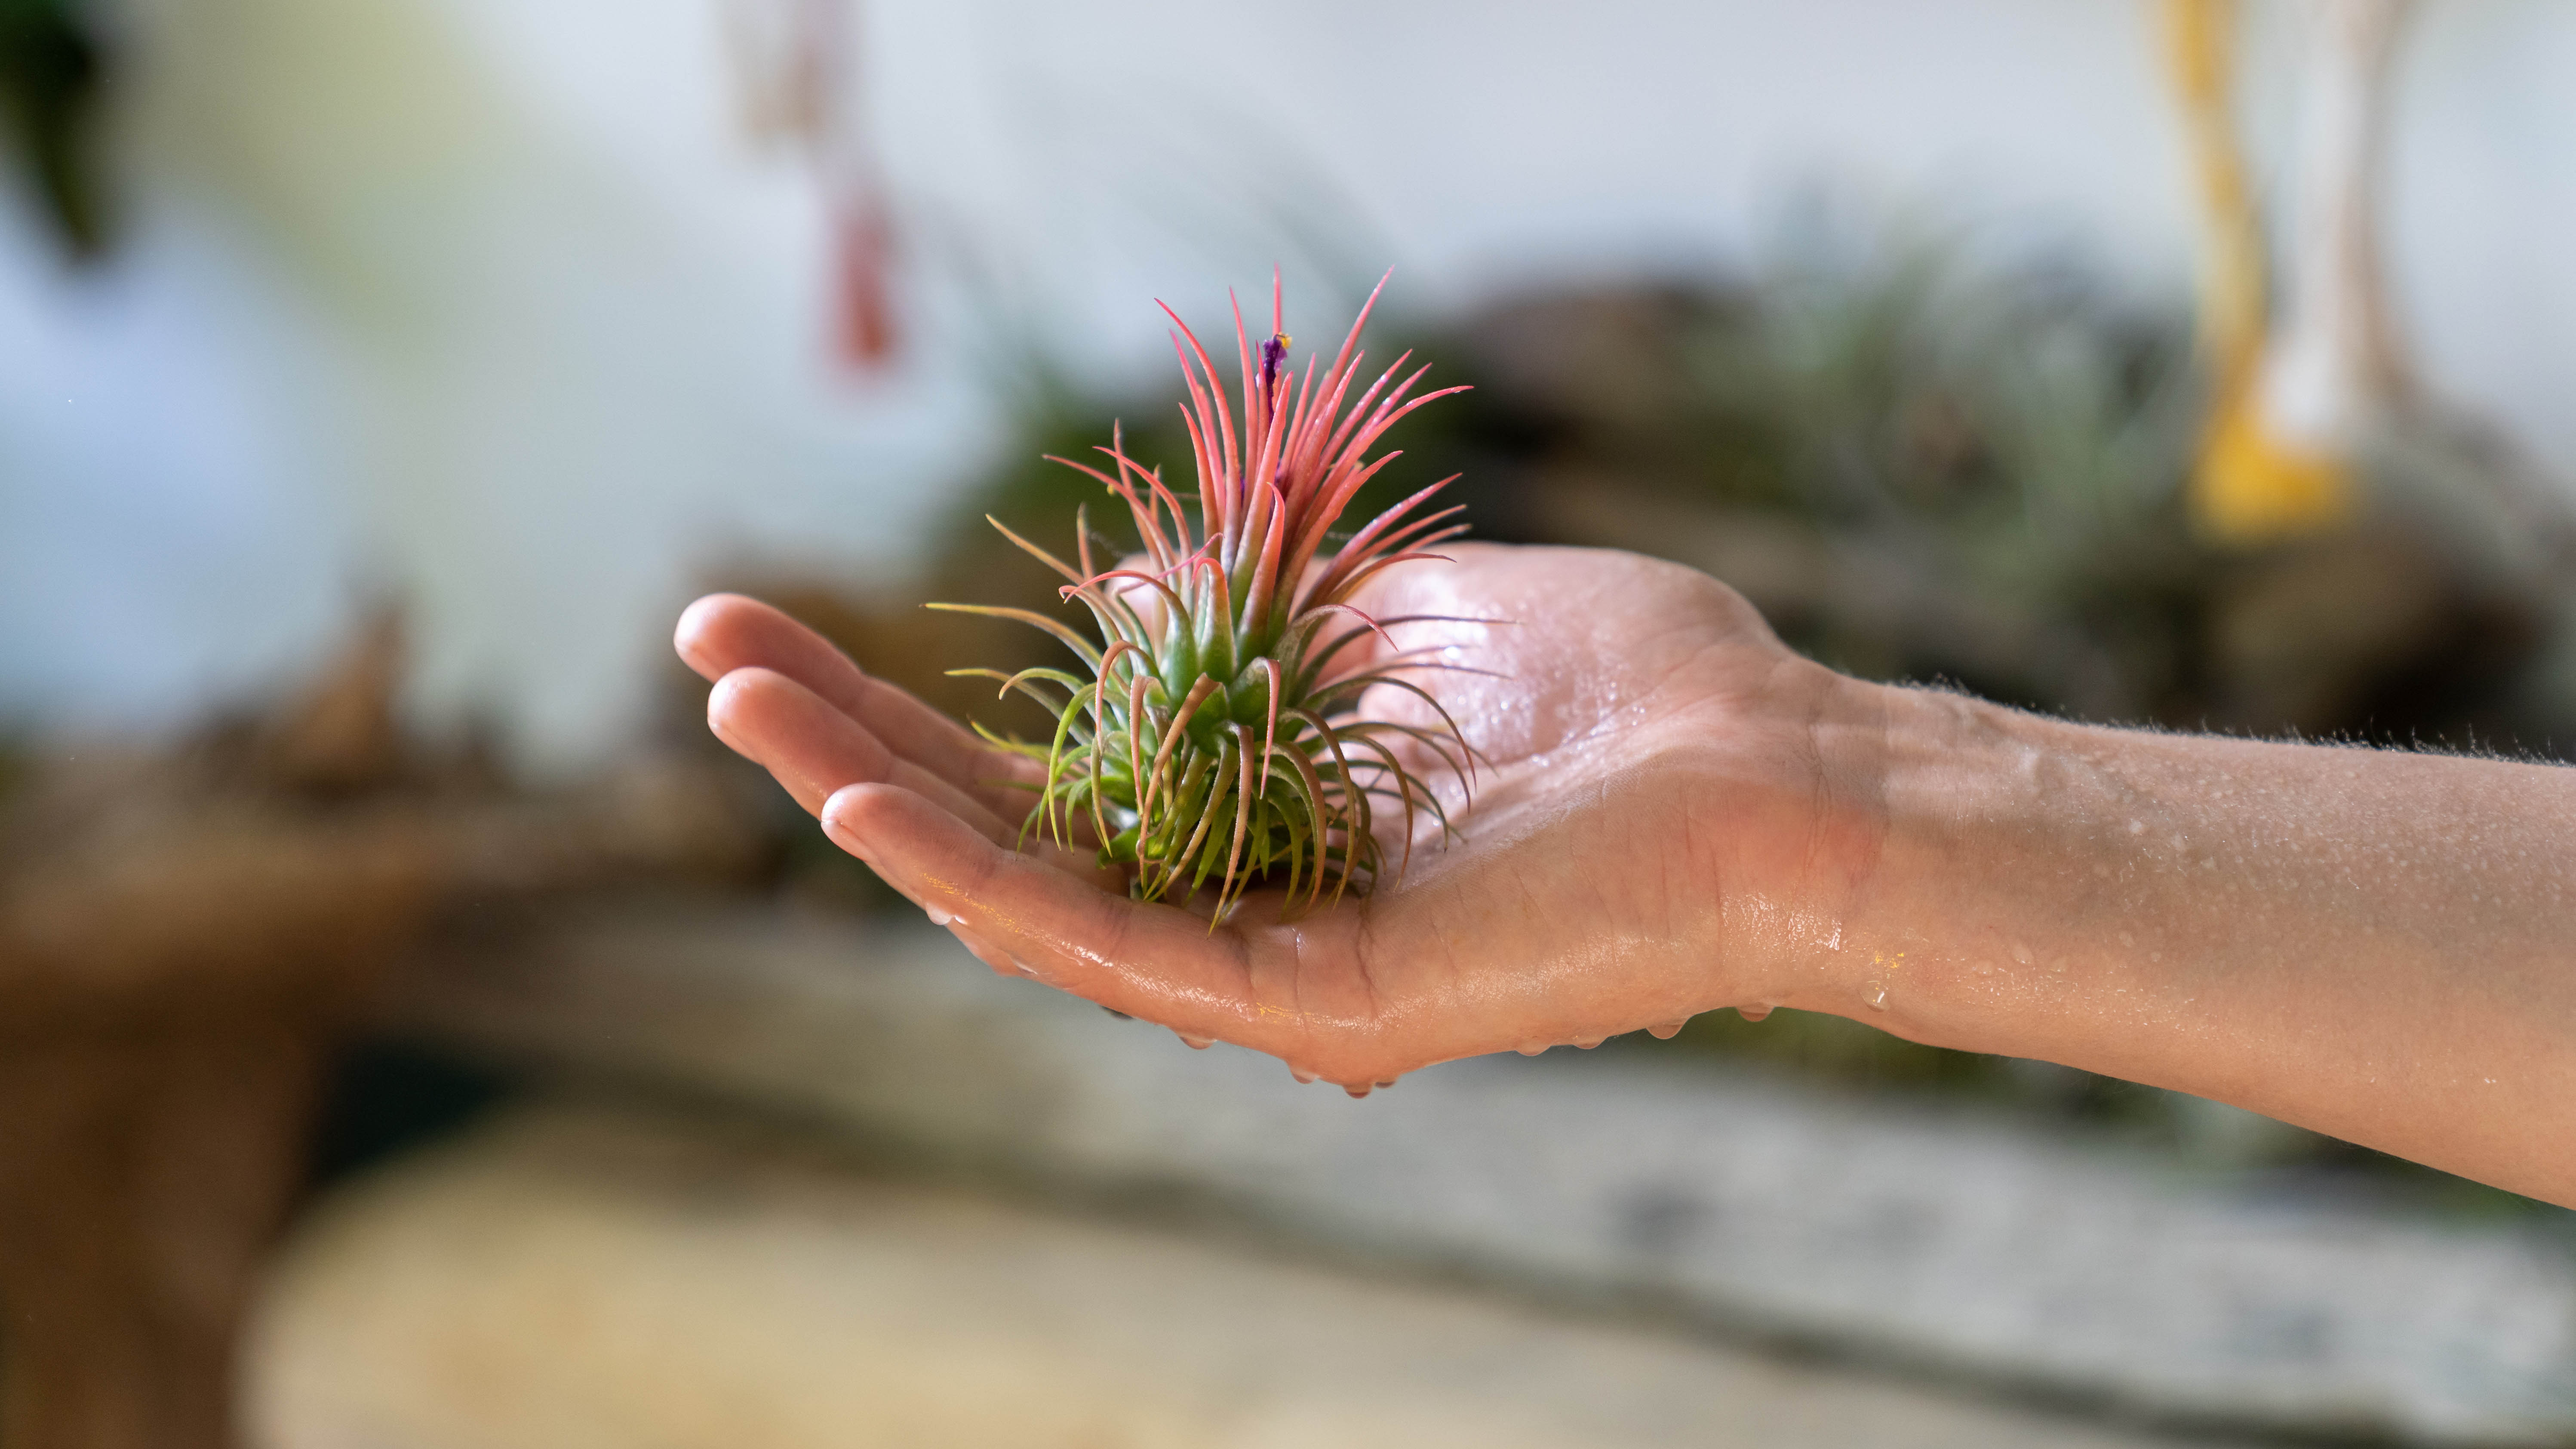 A wet hand holding an air plant